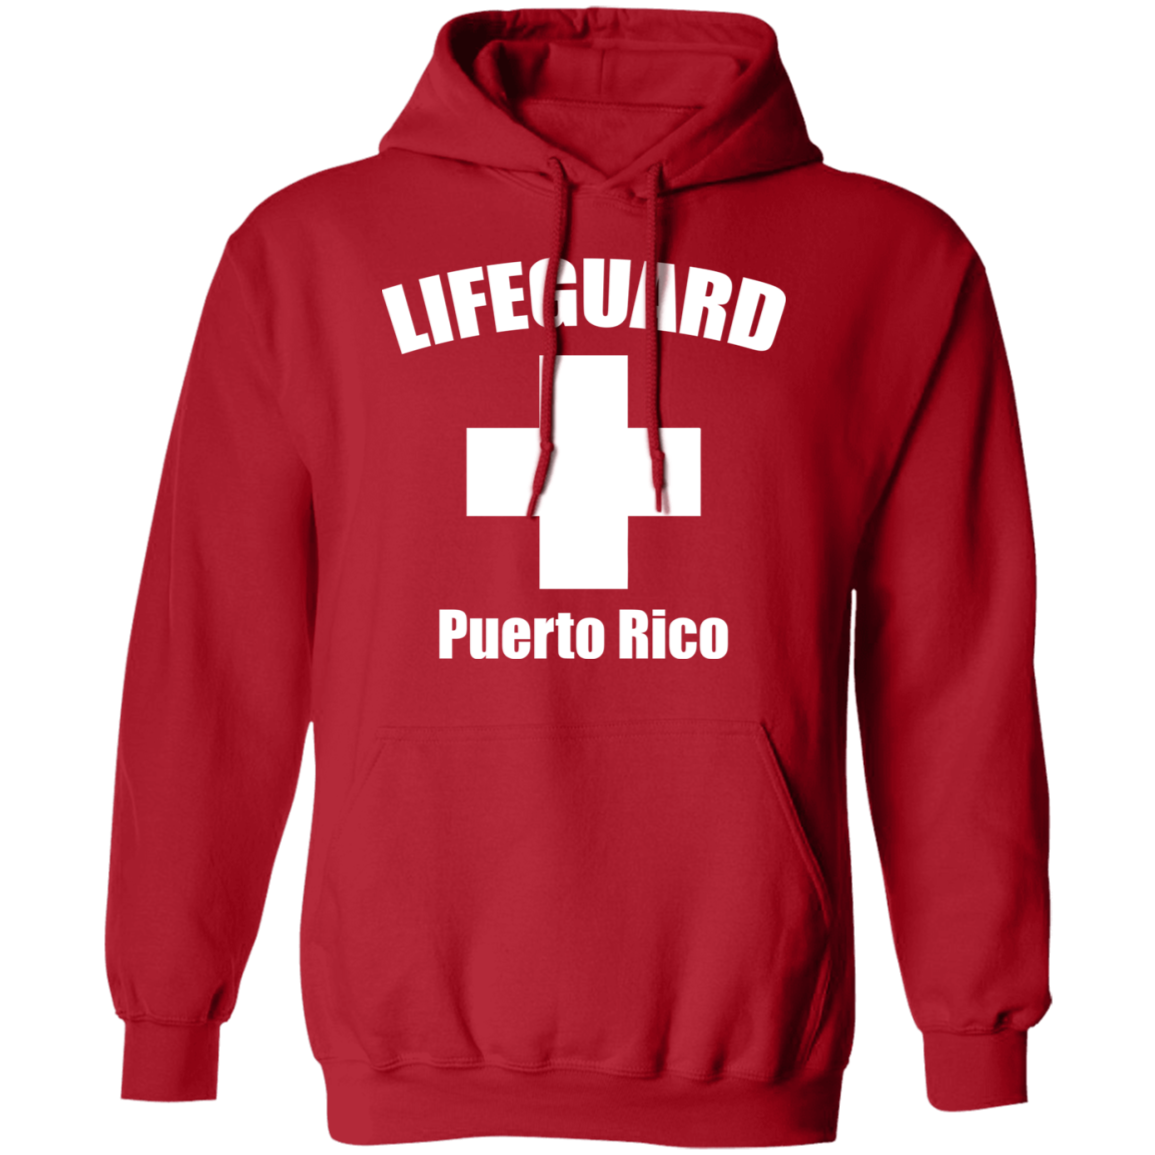 Puerto Rico Lifeguard Hoodie